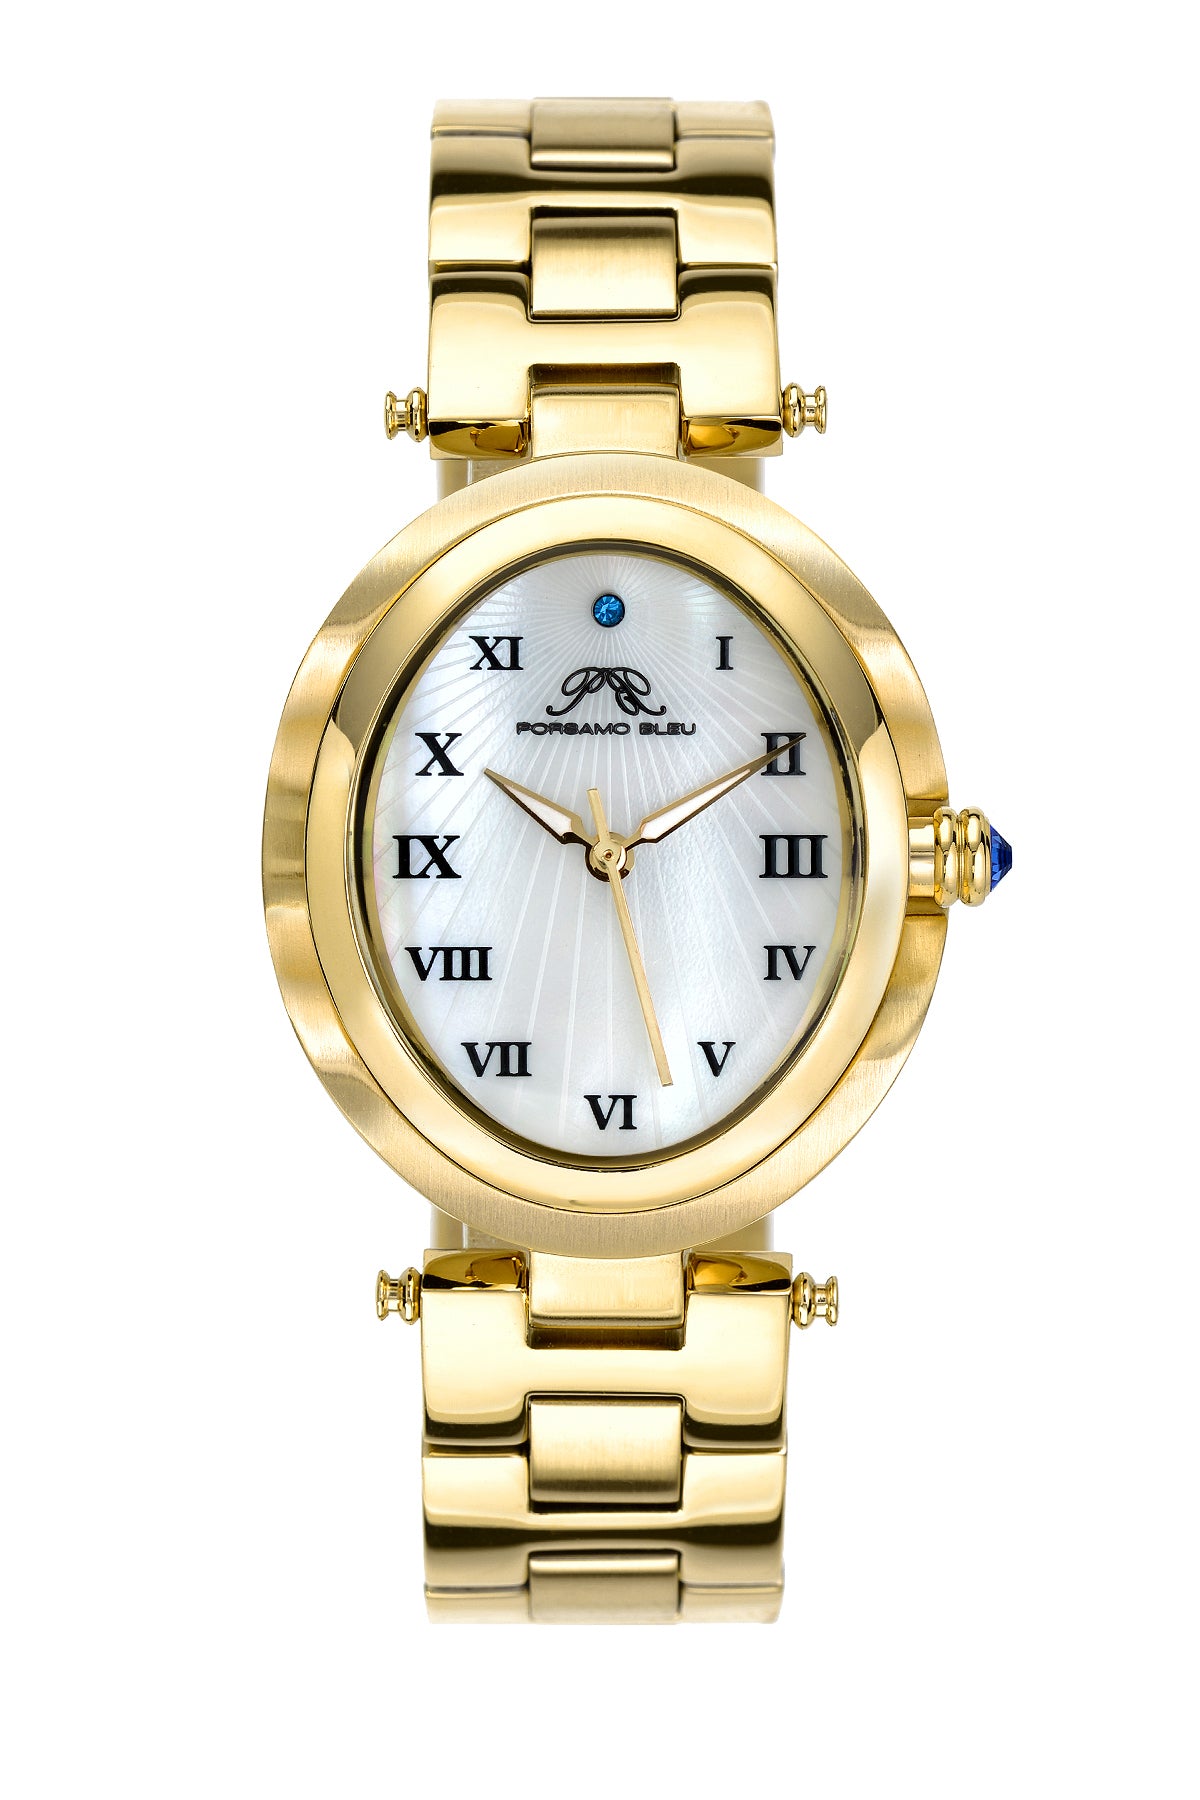 Porsamo Bleu South Sea Oval Luxury Women's Stainless Steel Watch, Champagne 105BSSO